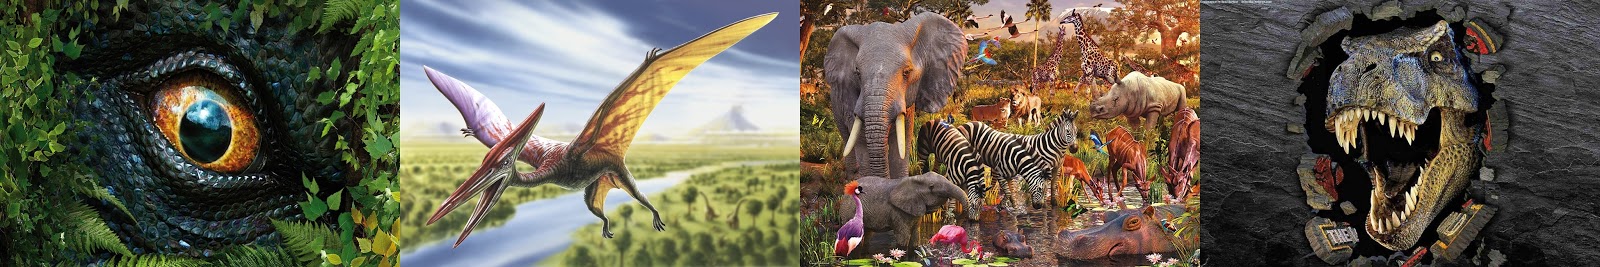 Annett's Sims 4 Welt: Dinosaurs & other Animals Walls